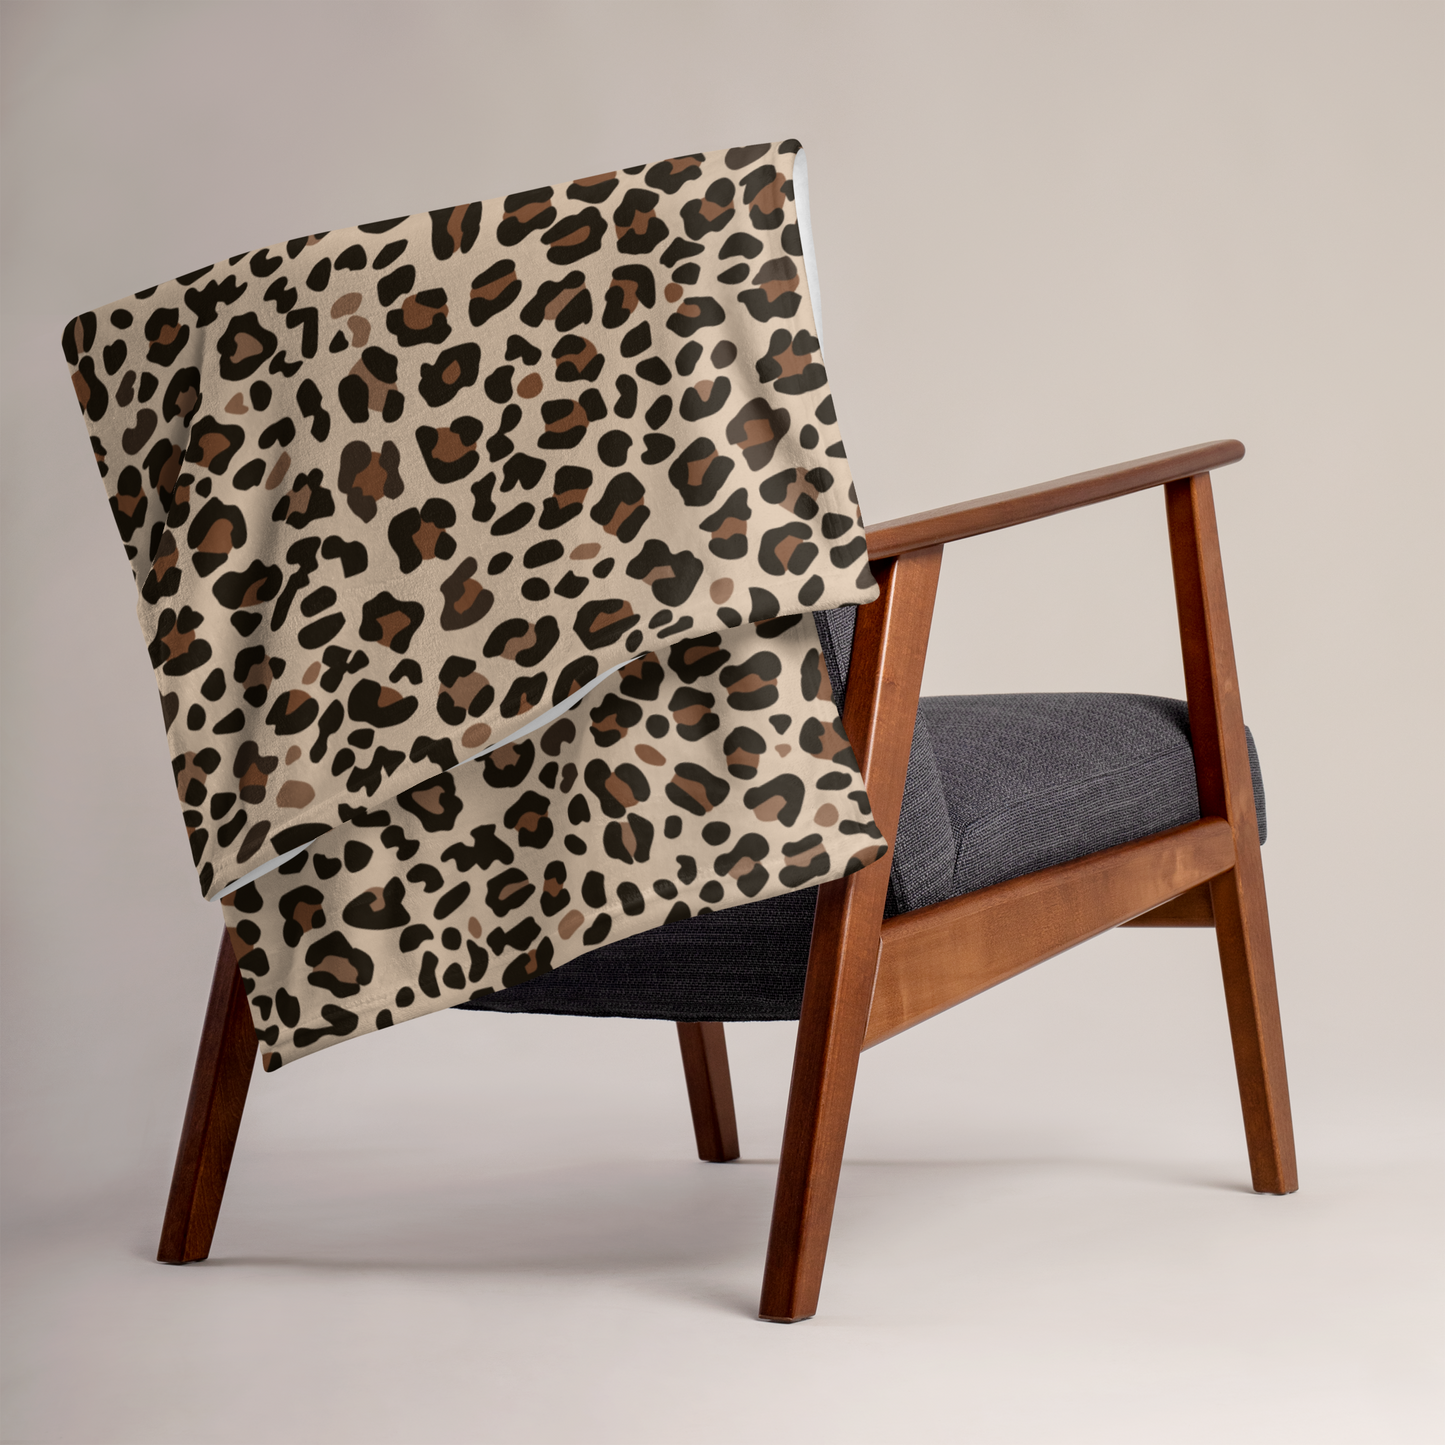 Throw Blanket | Leopard Animal Print